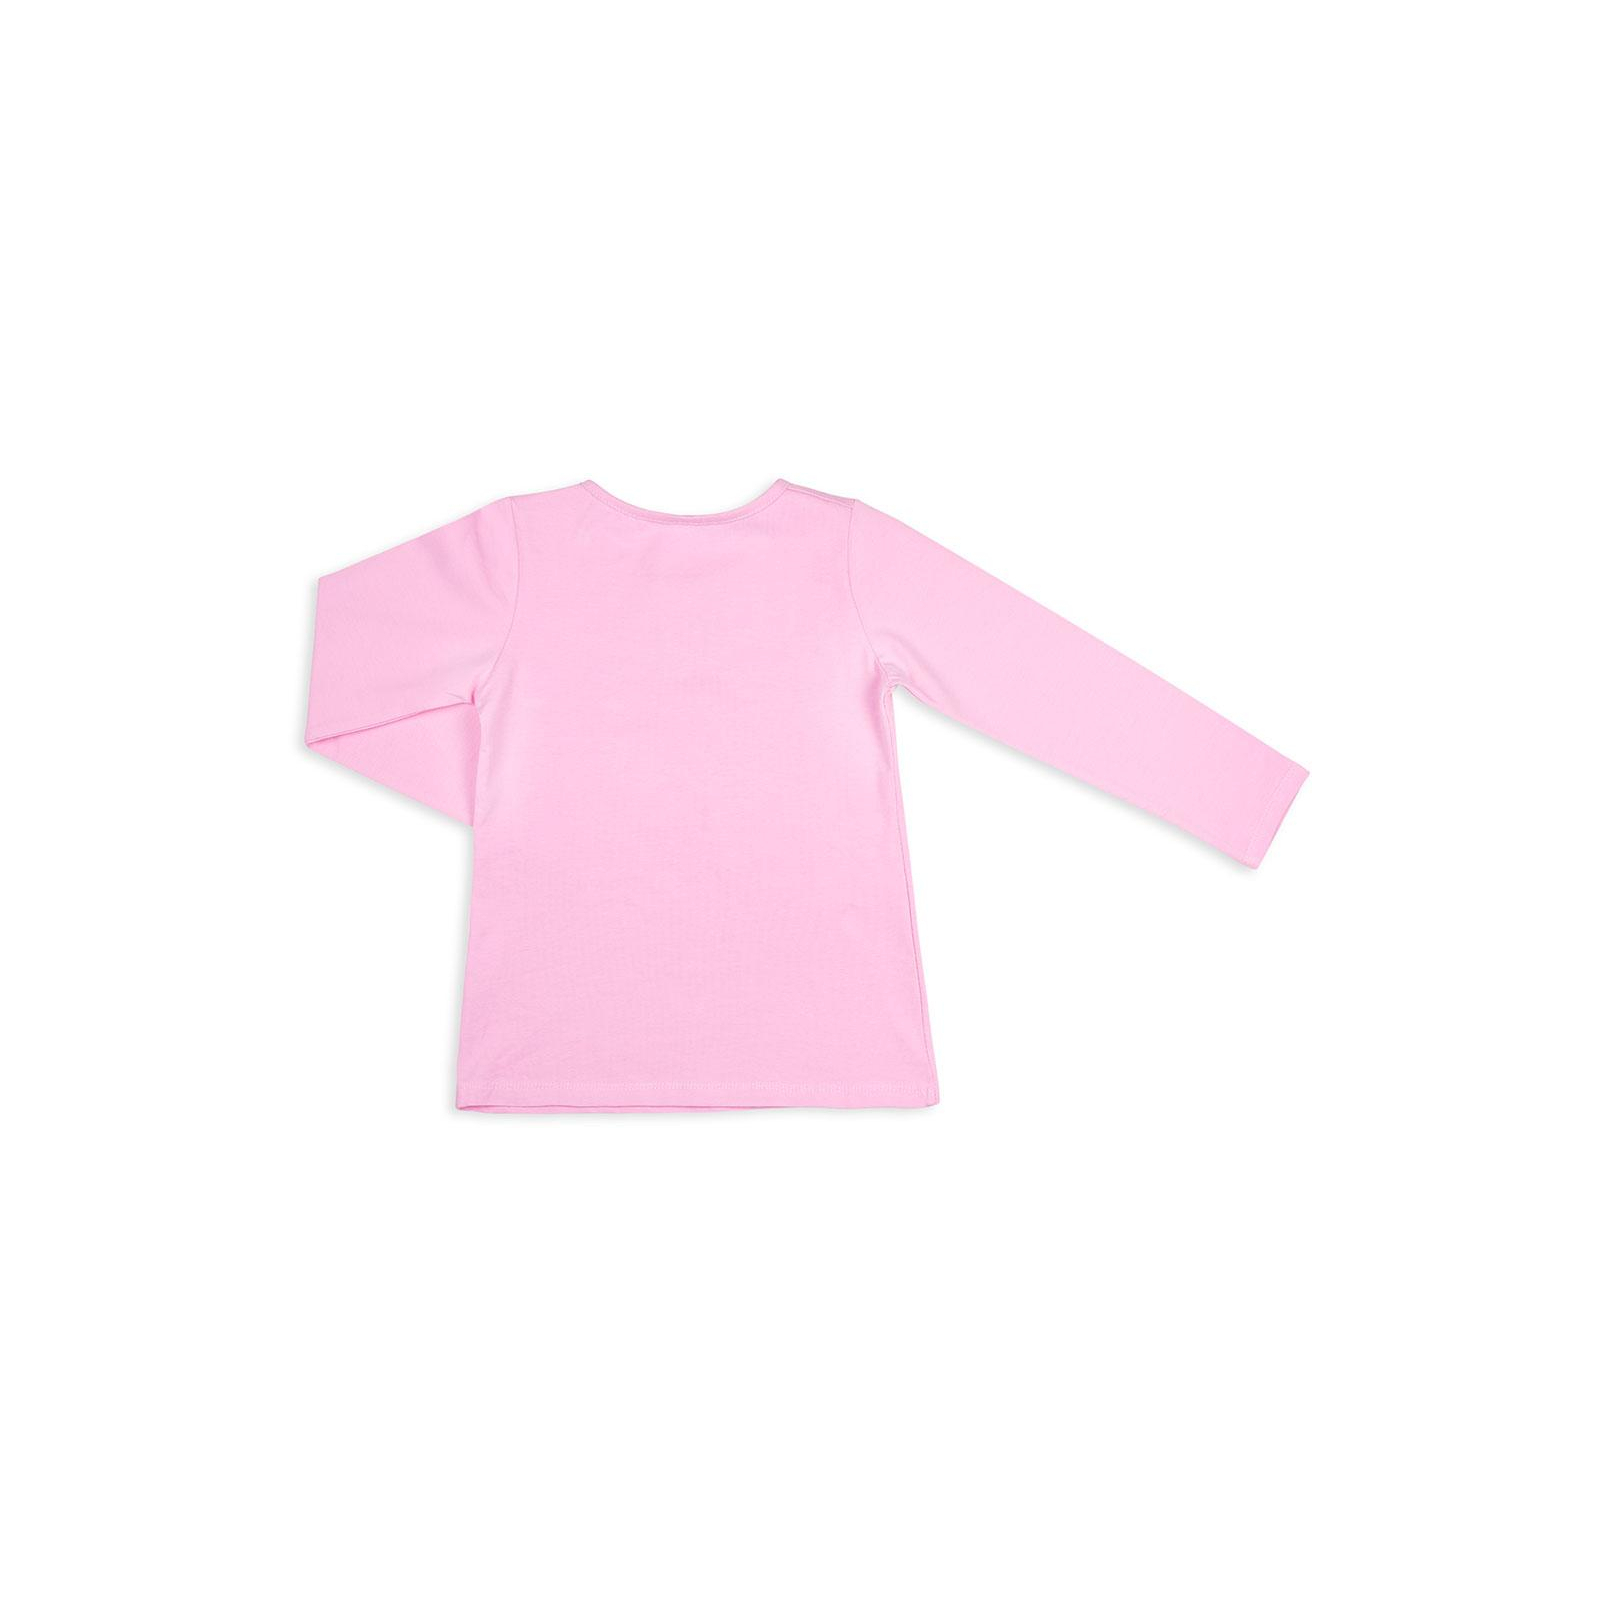 Пижама Matilda с котиками (4158-116G-pink) изображение 5